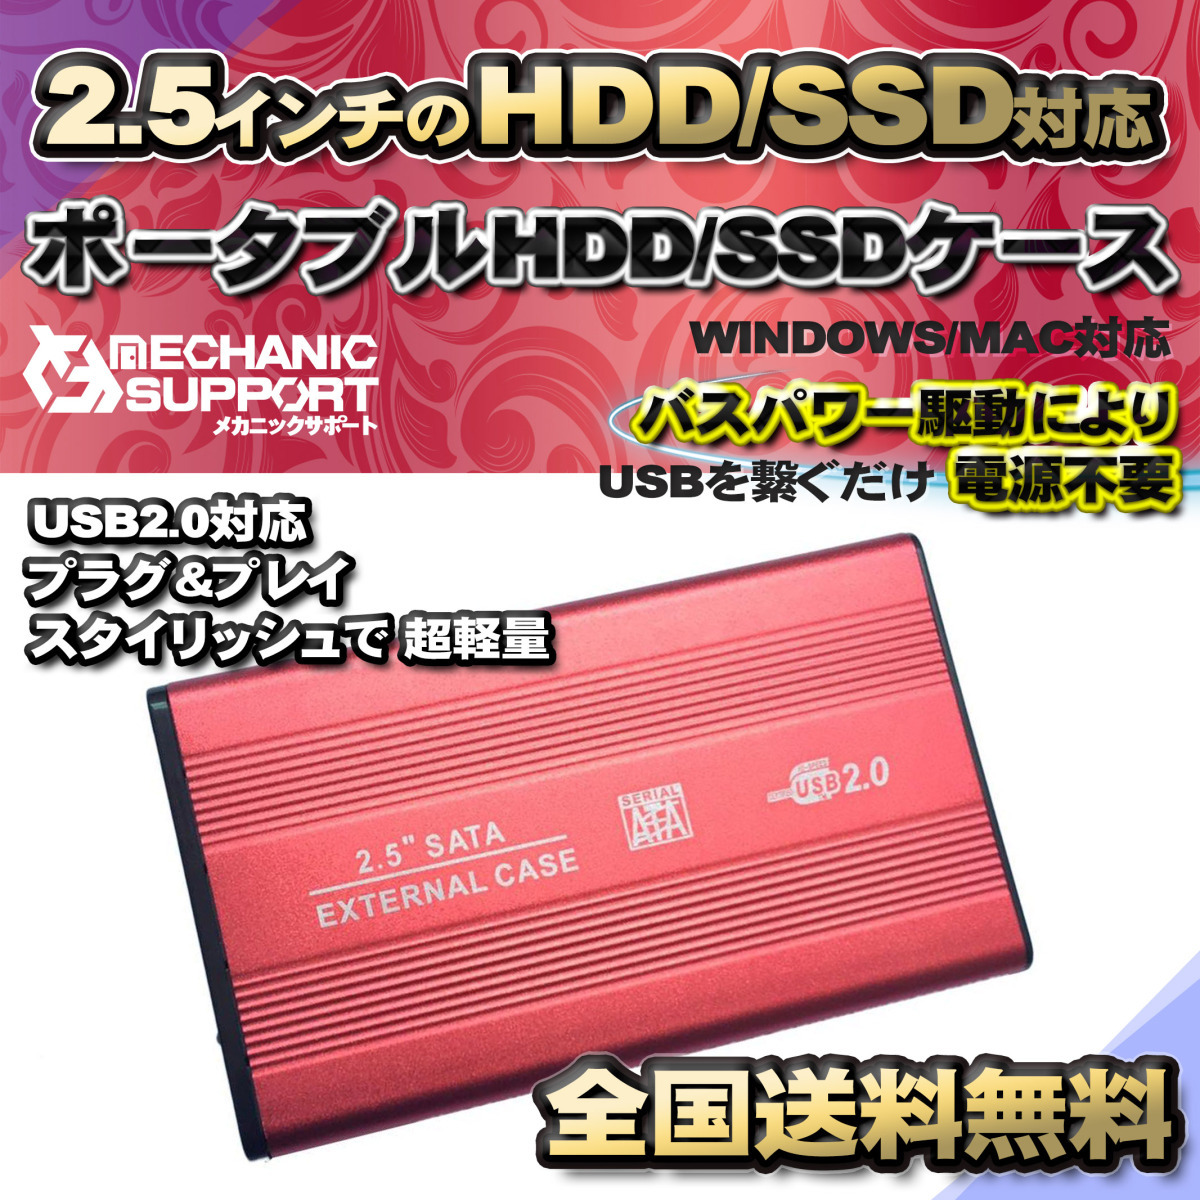 【USB2.0対応】【アルミケース】 2.5インチ HDD SSD ハードディスク 外付け SATA 2.0 USB 接続 【レッド】の画像1